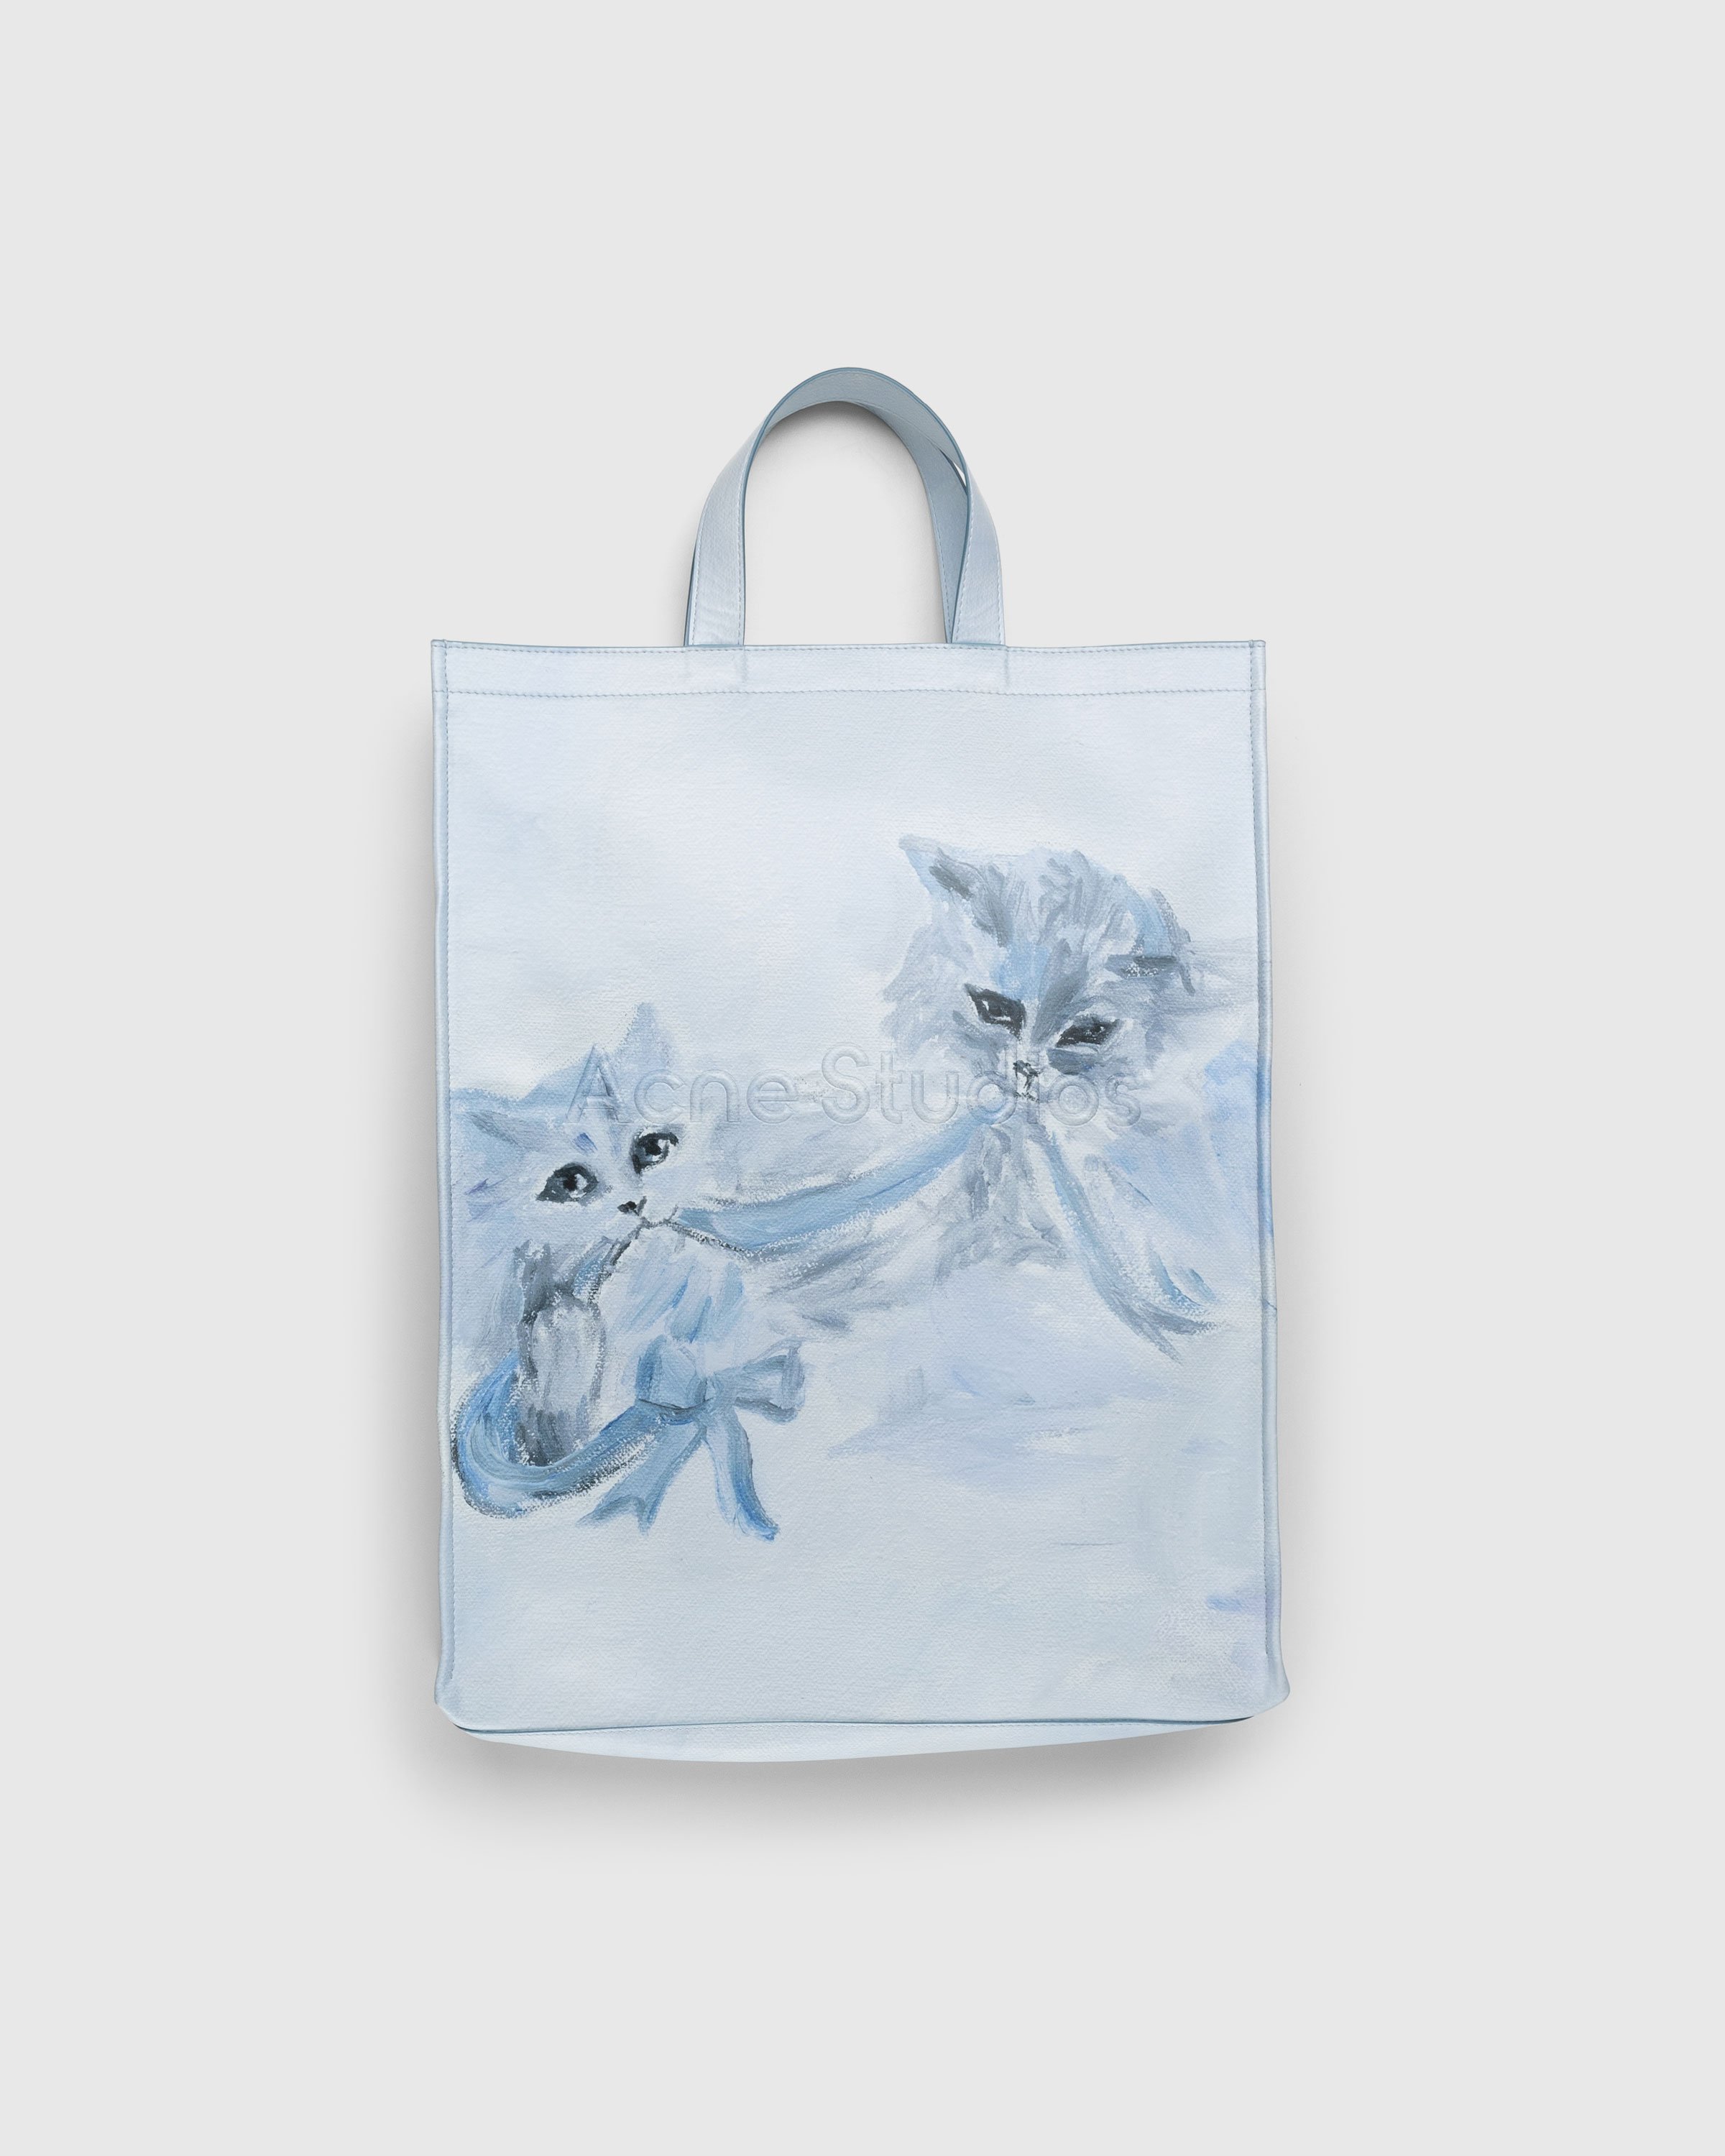 Acne Studios - Cat Print Logo Tote Bag Blue - Accessories - Blue - Image 1